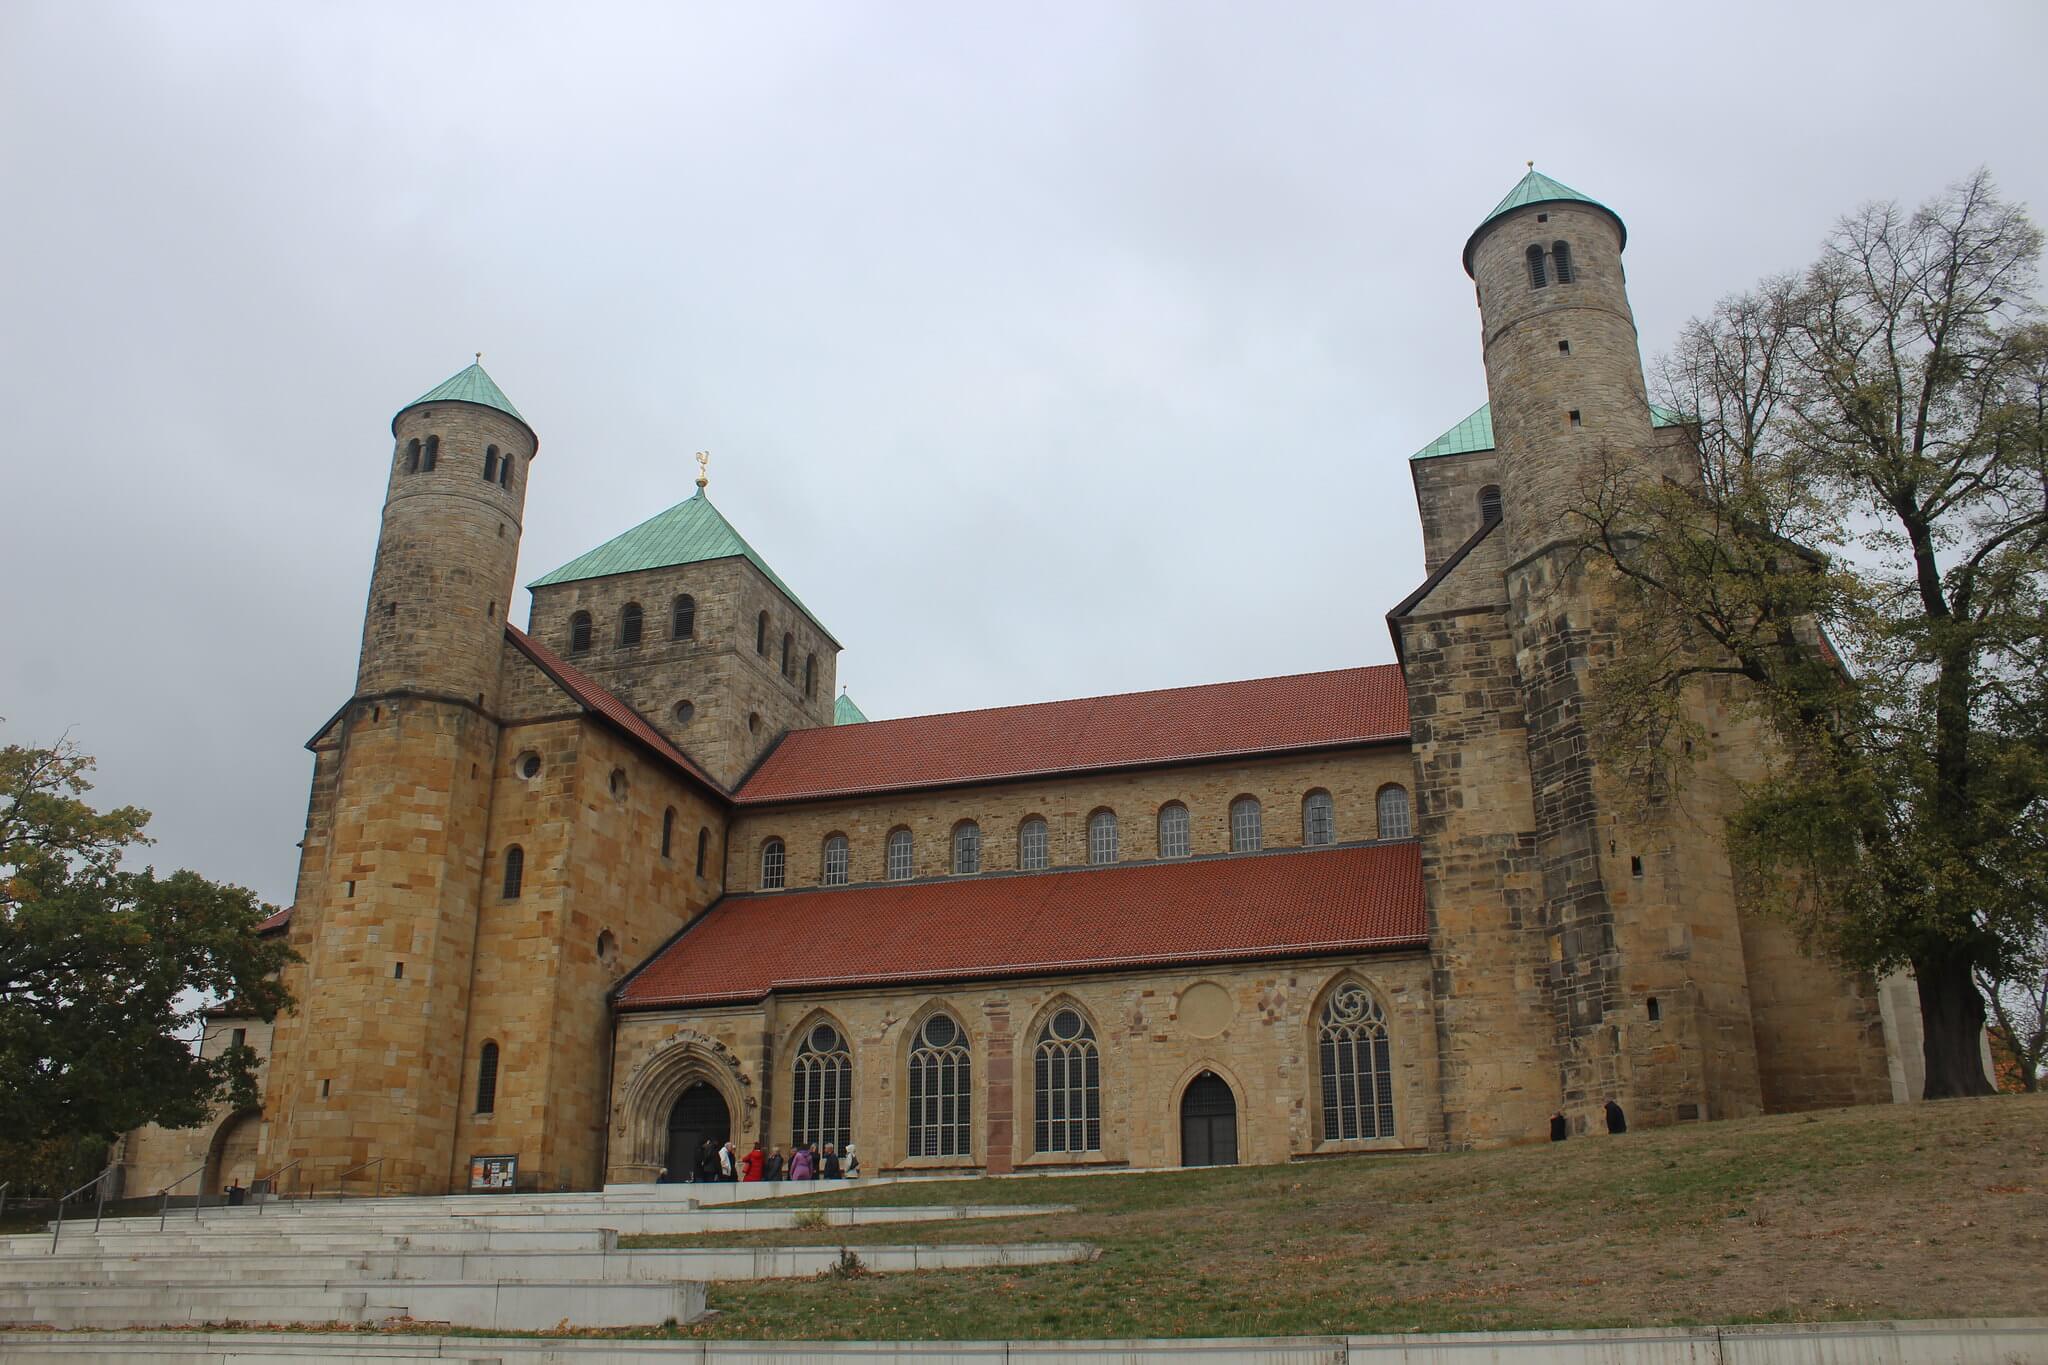 St Michael in Hildesheim, Germany, Hanover